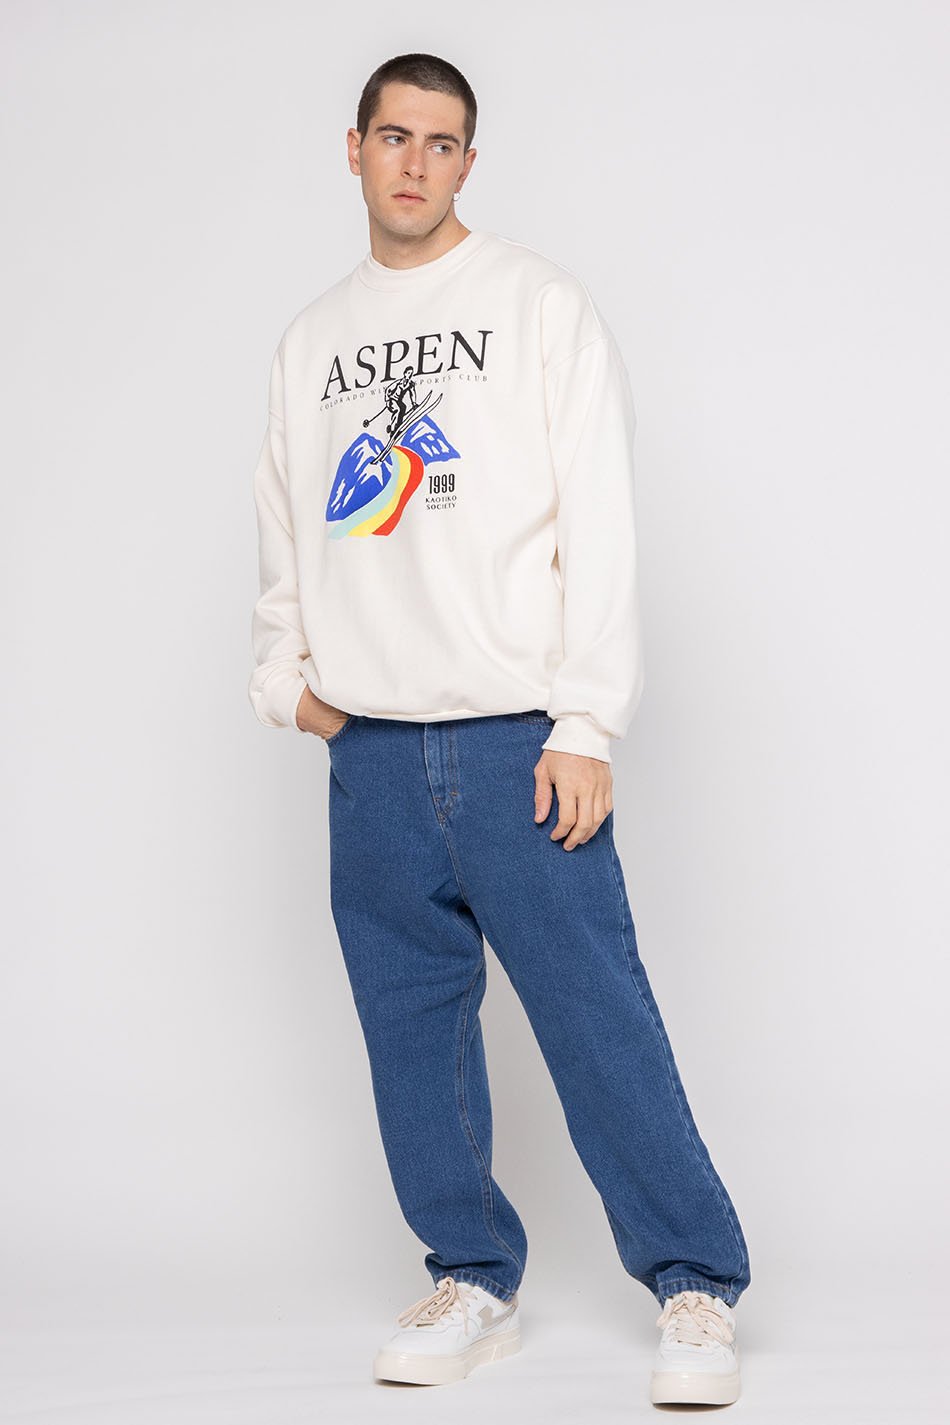 Aspen Ivory Sweatshirt